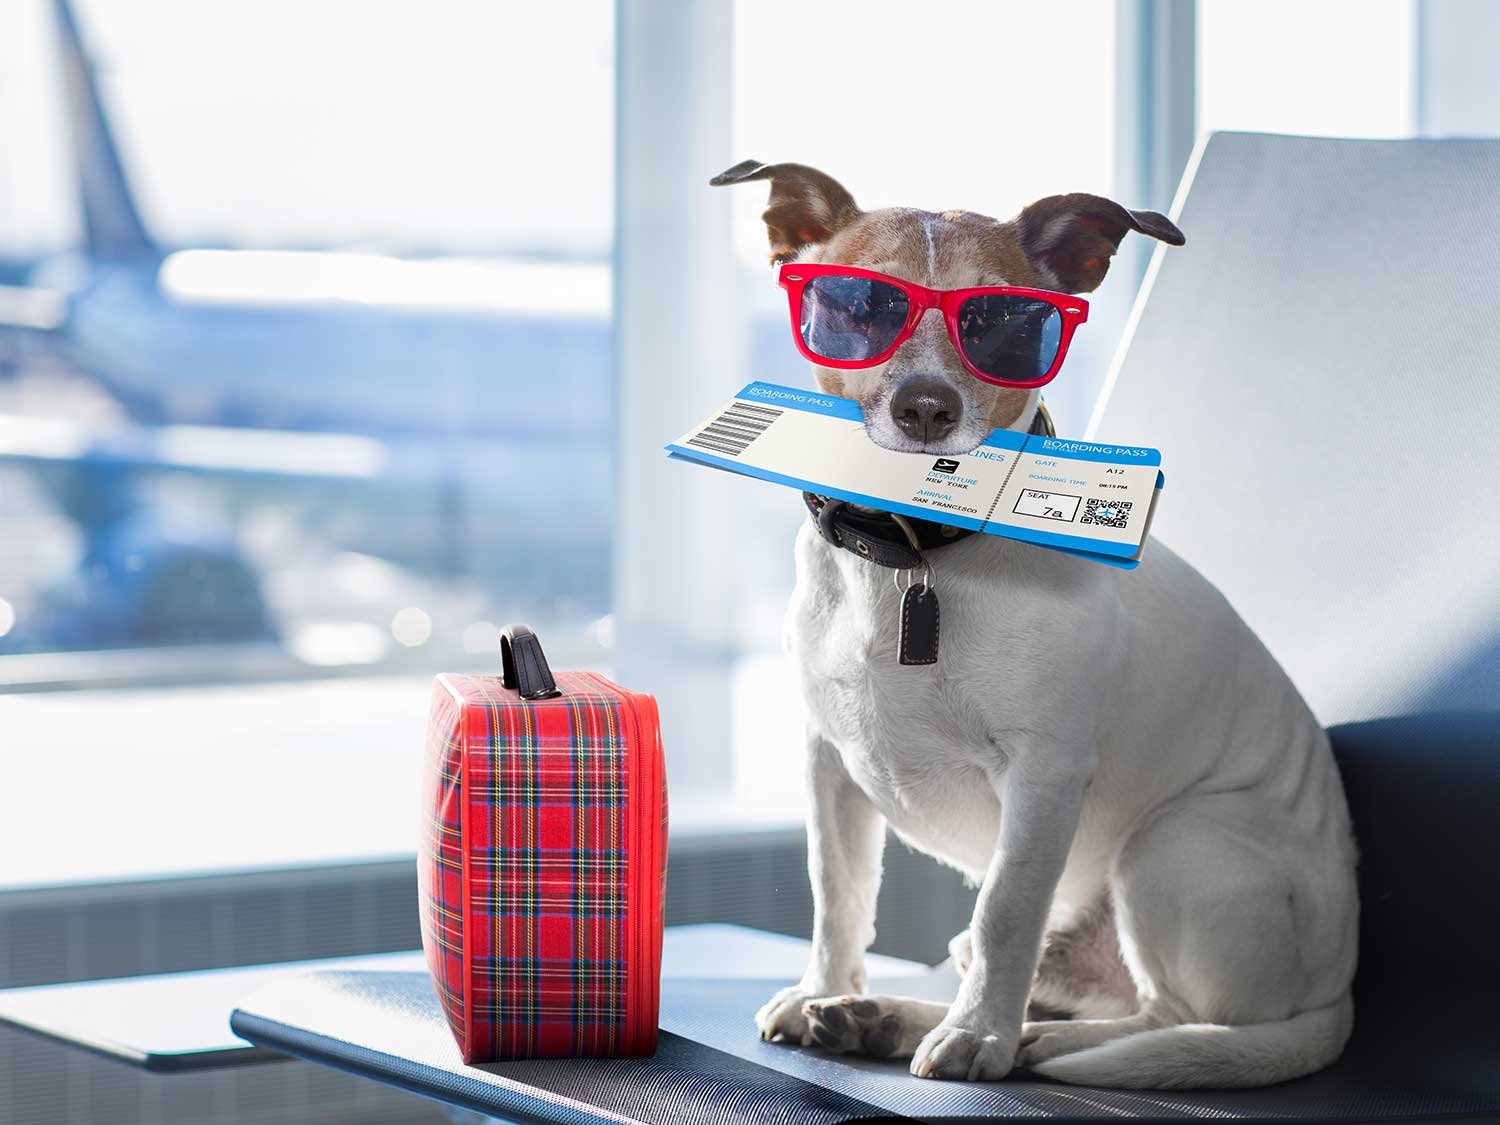 Dog traveling on airplane.